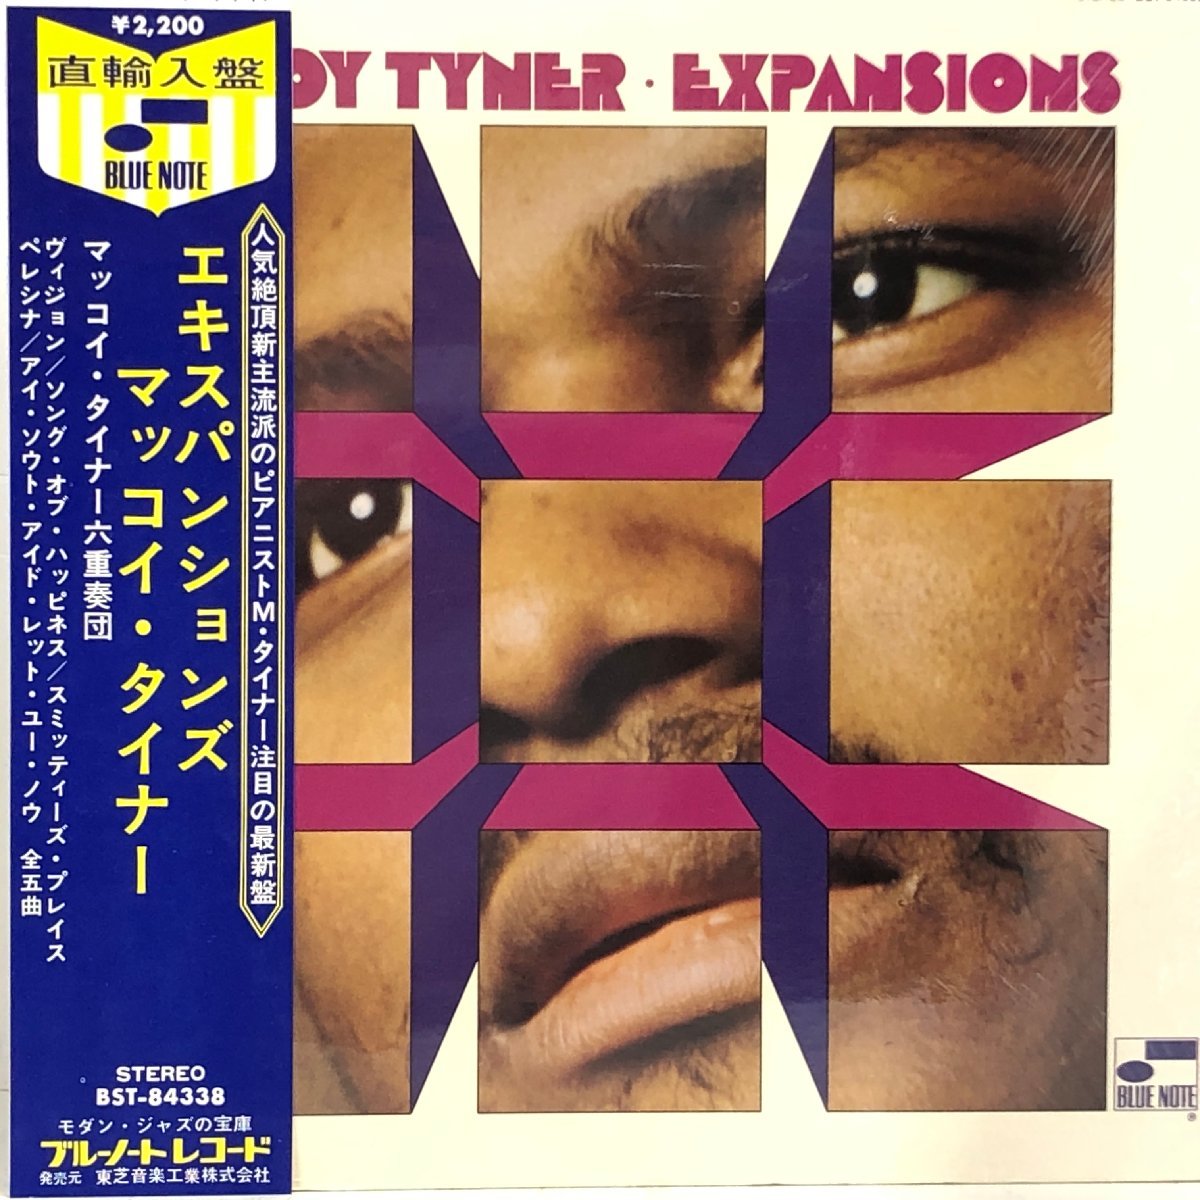 【US盤 LP】McCOY TYNER / EXPANSIONS エキスパンションズ / マッコイ・タイナー / BLUE NOTE BST-84338